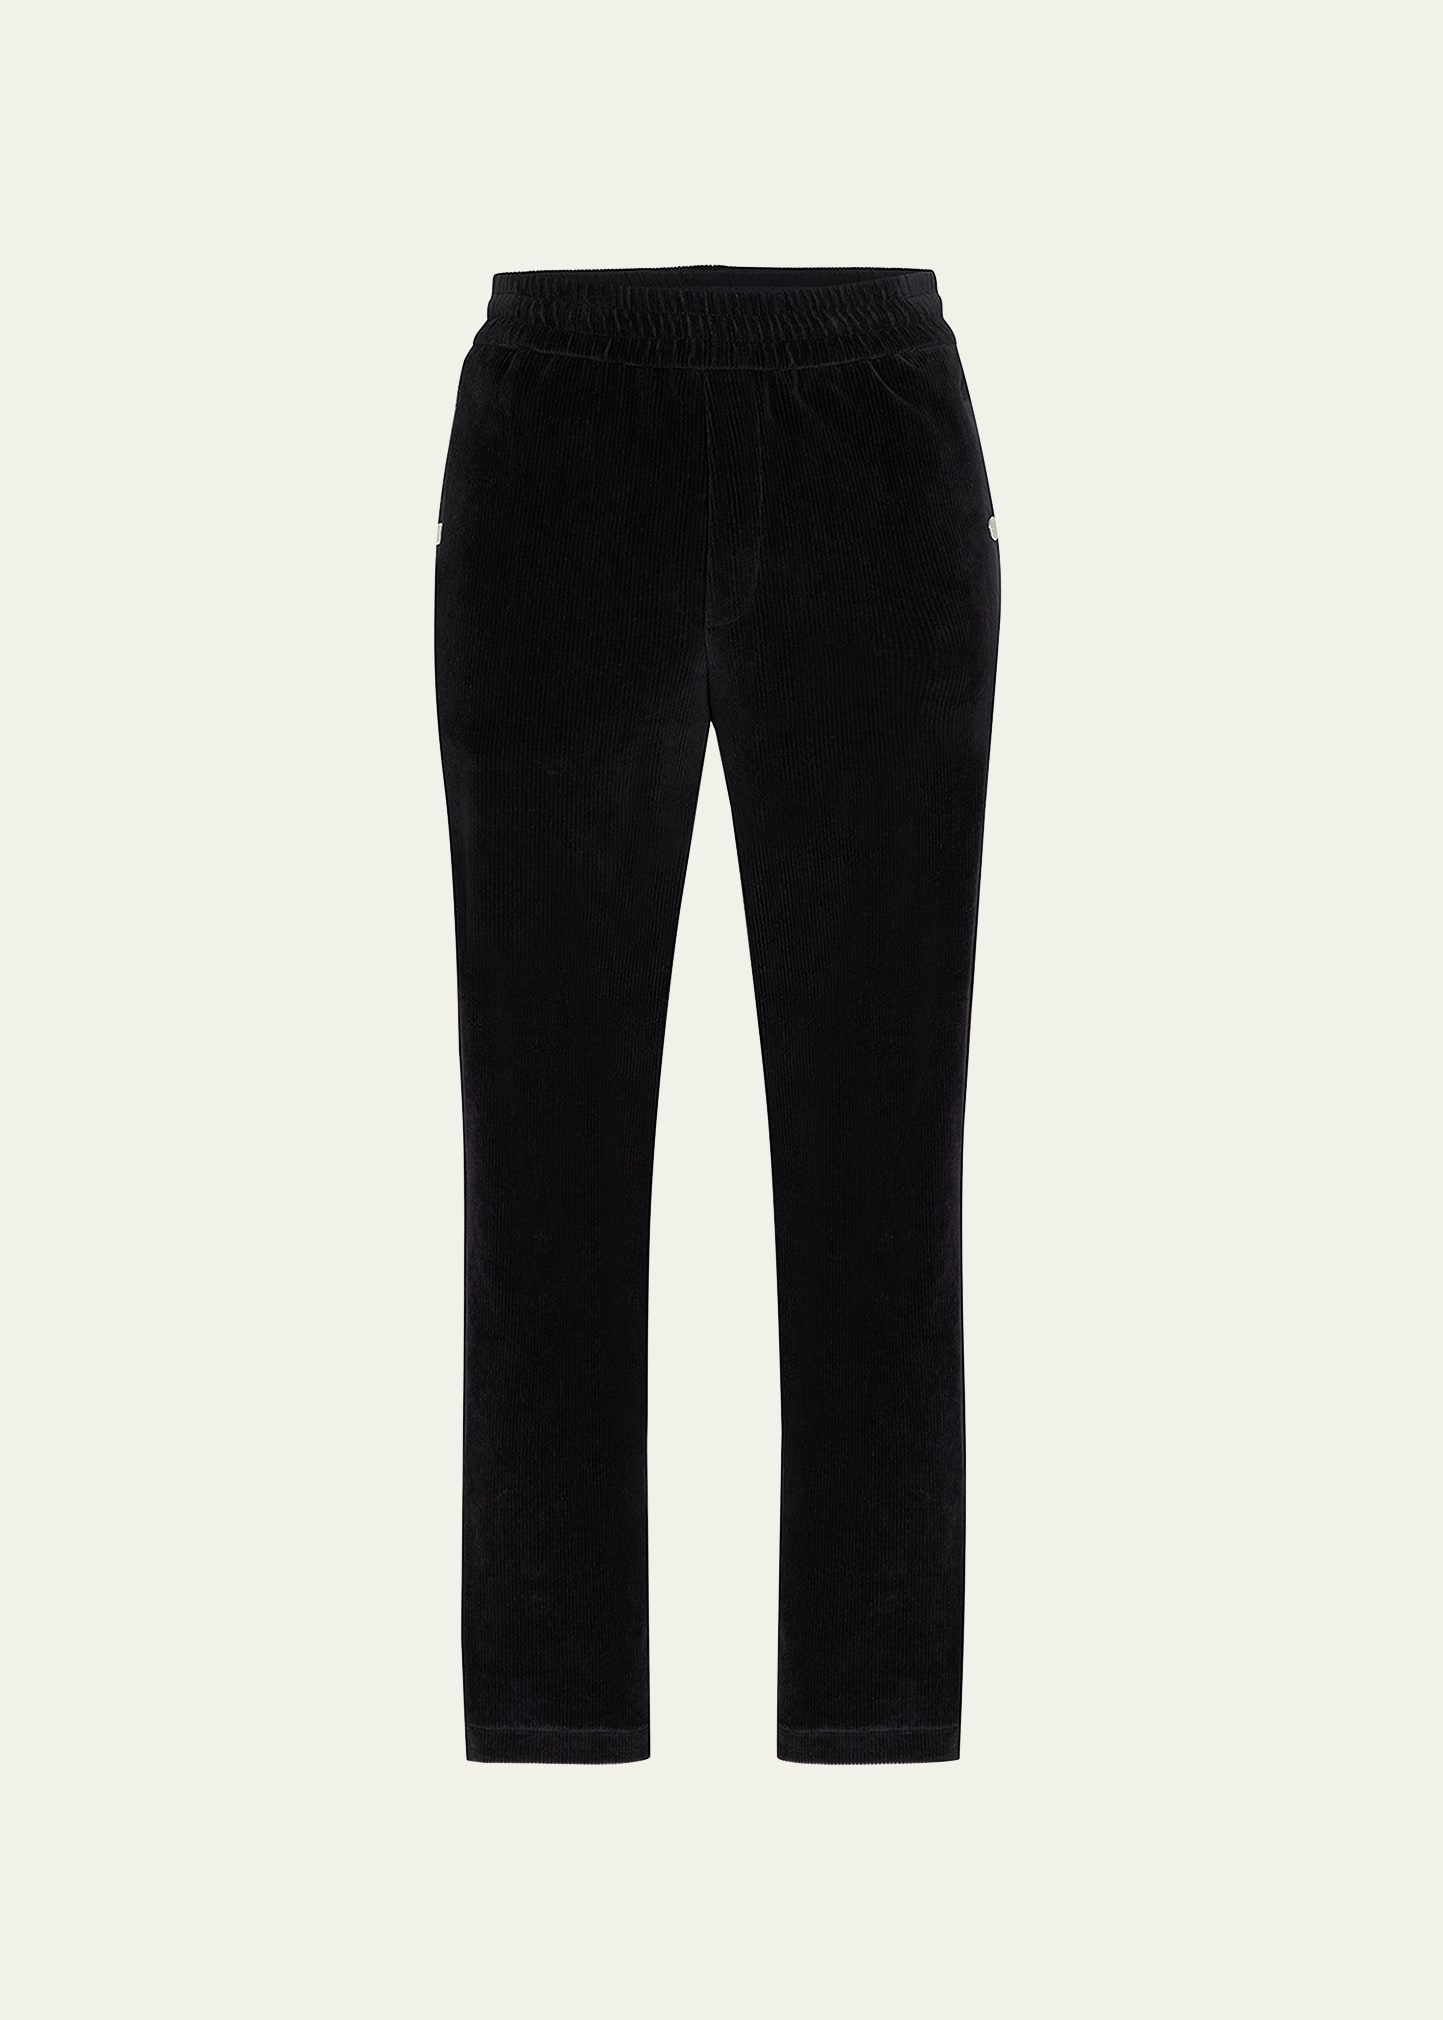 Moncler Men's Solid Sweatpants W/ Contrast Drawstring In Black